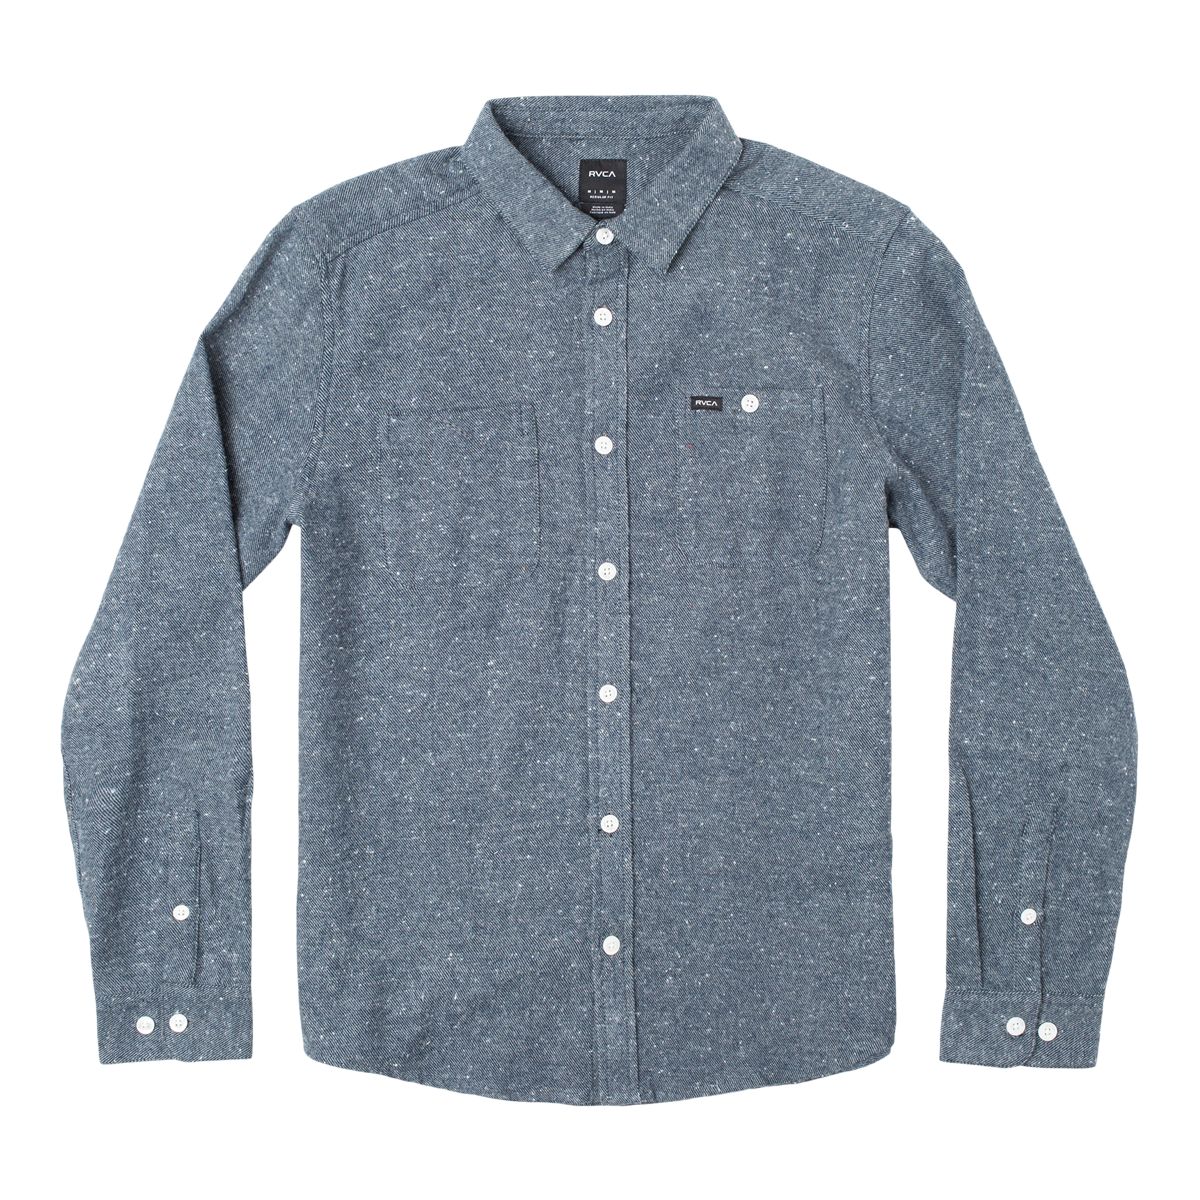 Rvca Men's Harvest Neps Flannel Long Sleeve Shirt